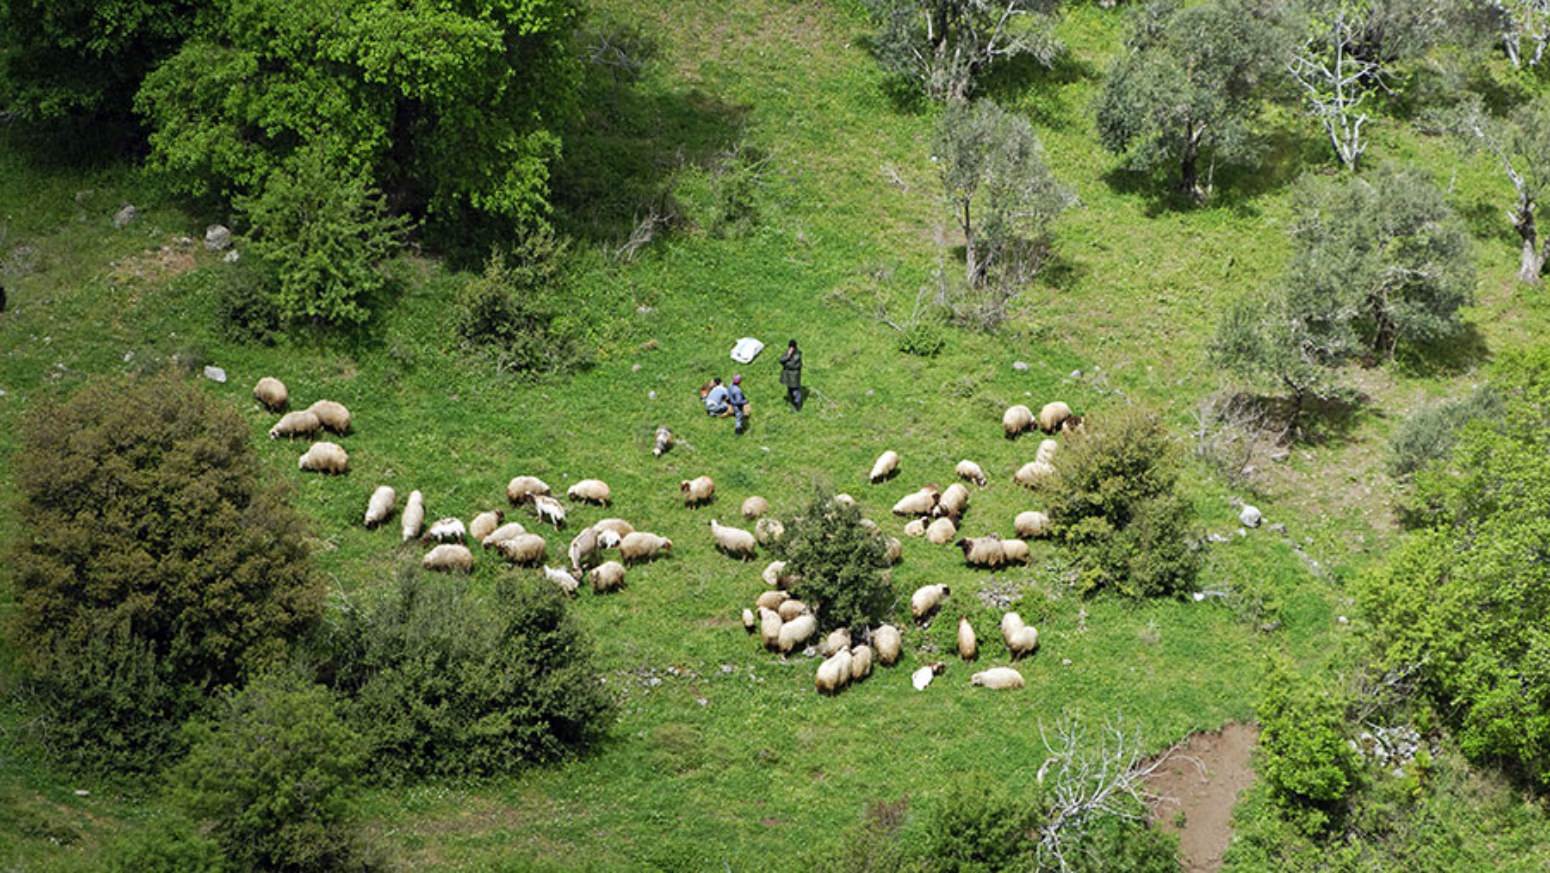 Farmers now teach sheep to follow a drone